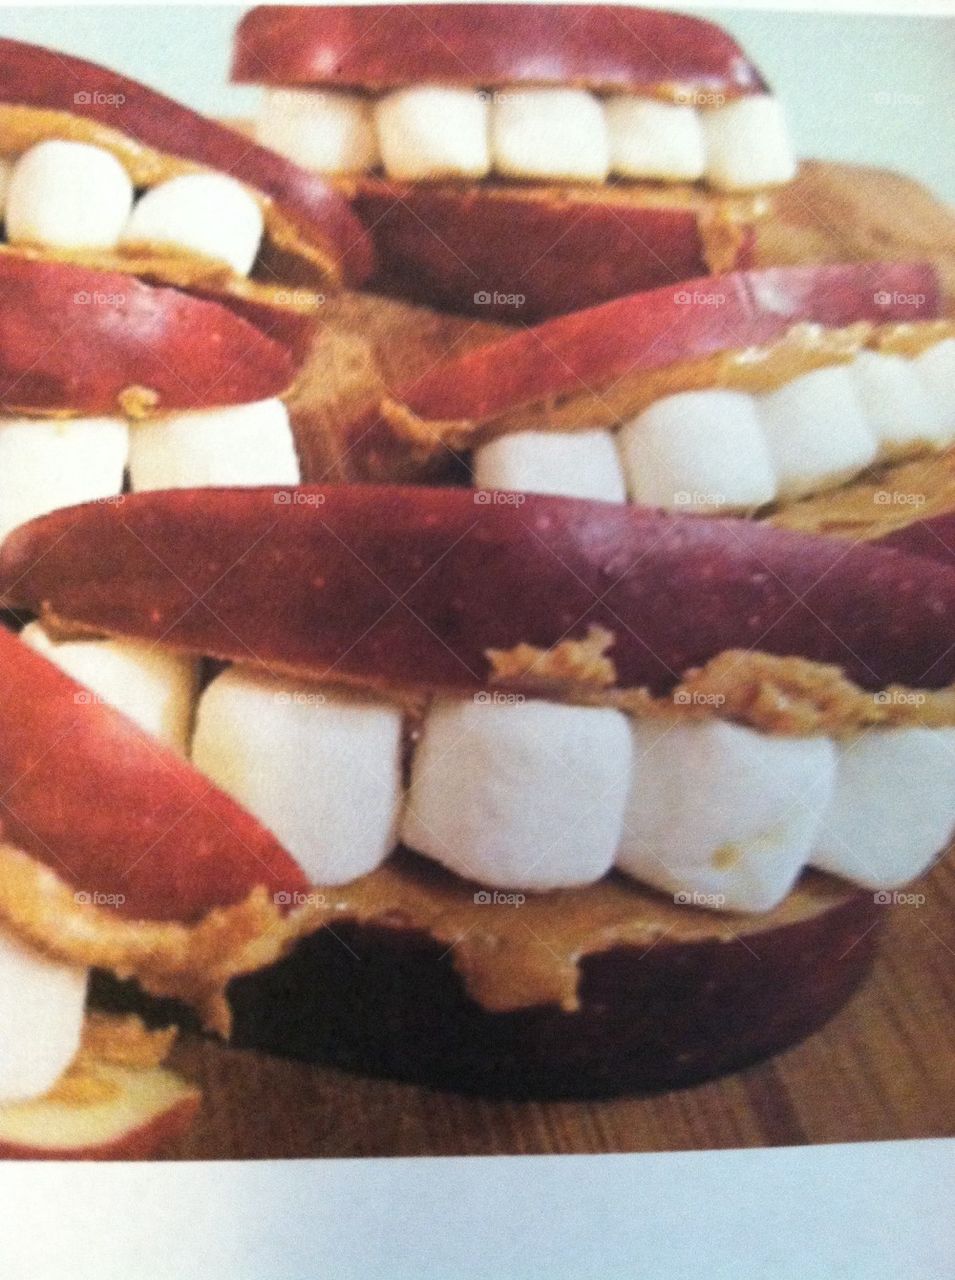 Apple peanut butter marshmallow mouths